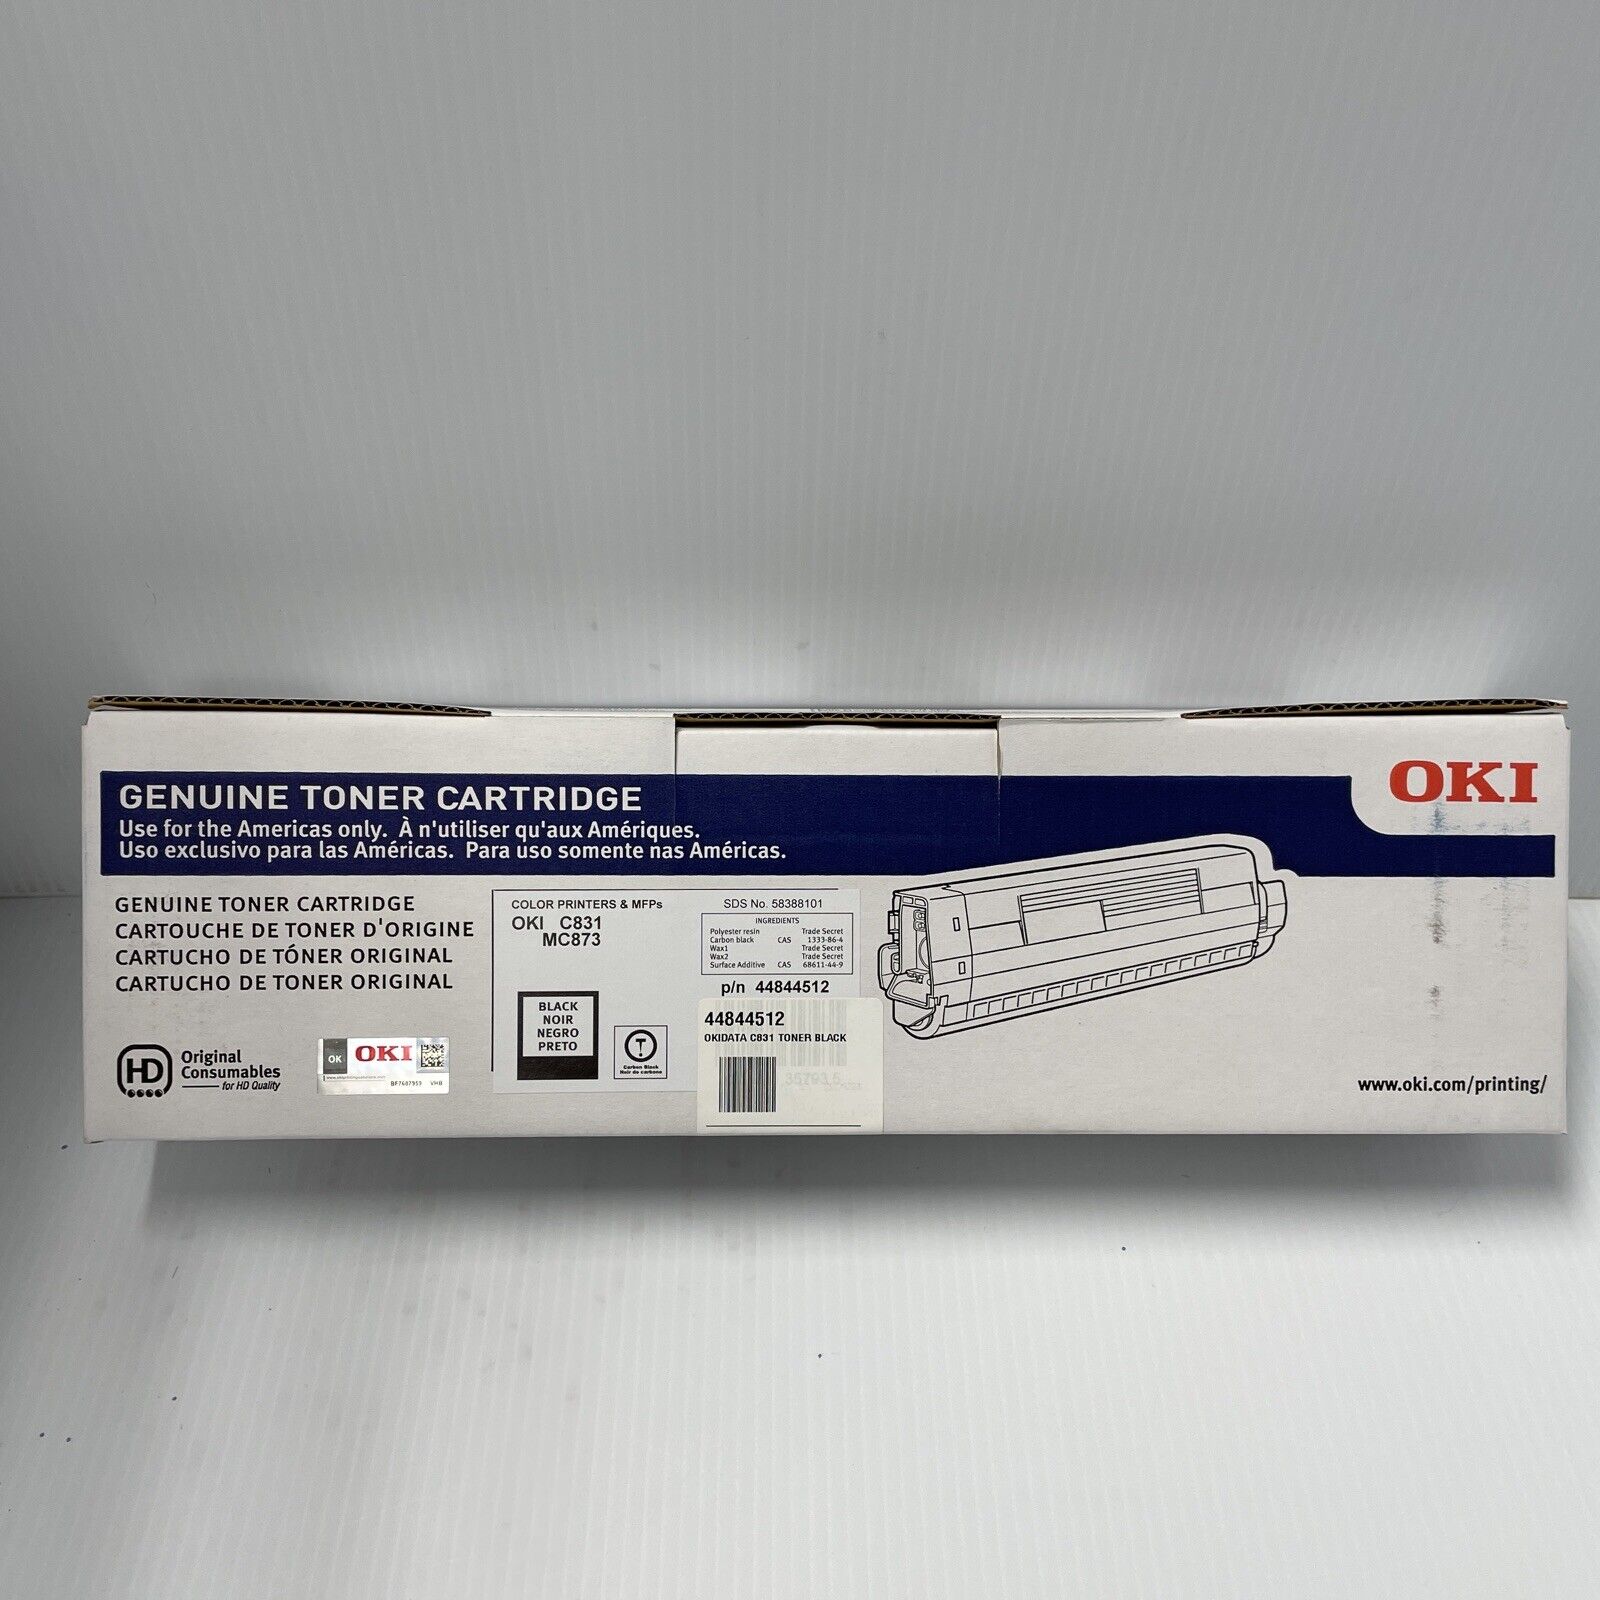 Okidata OKI C831 M873 Black Genuine Toner Cartridge P/N 44844512